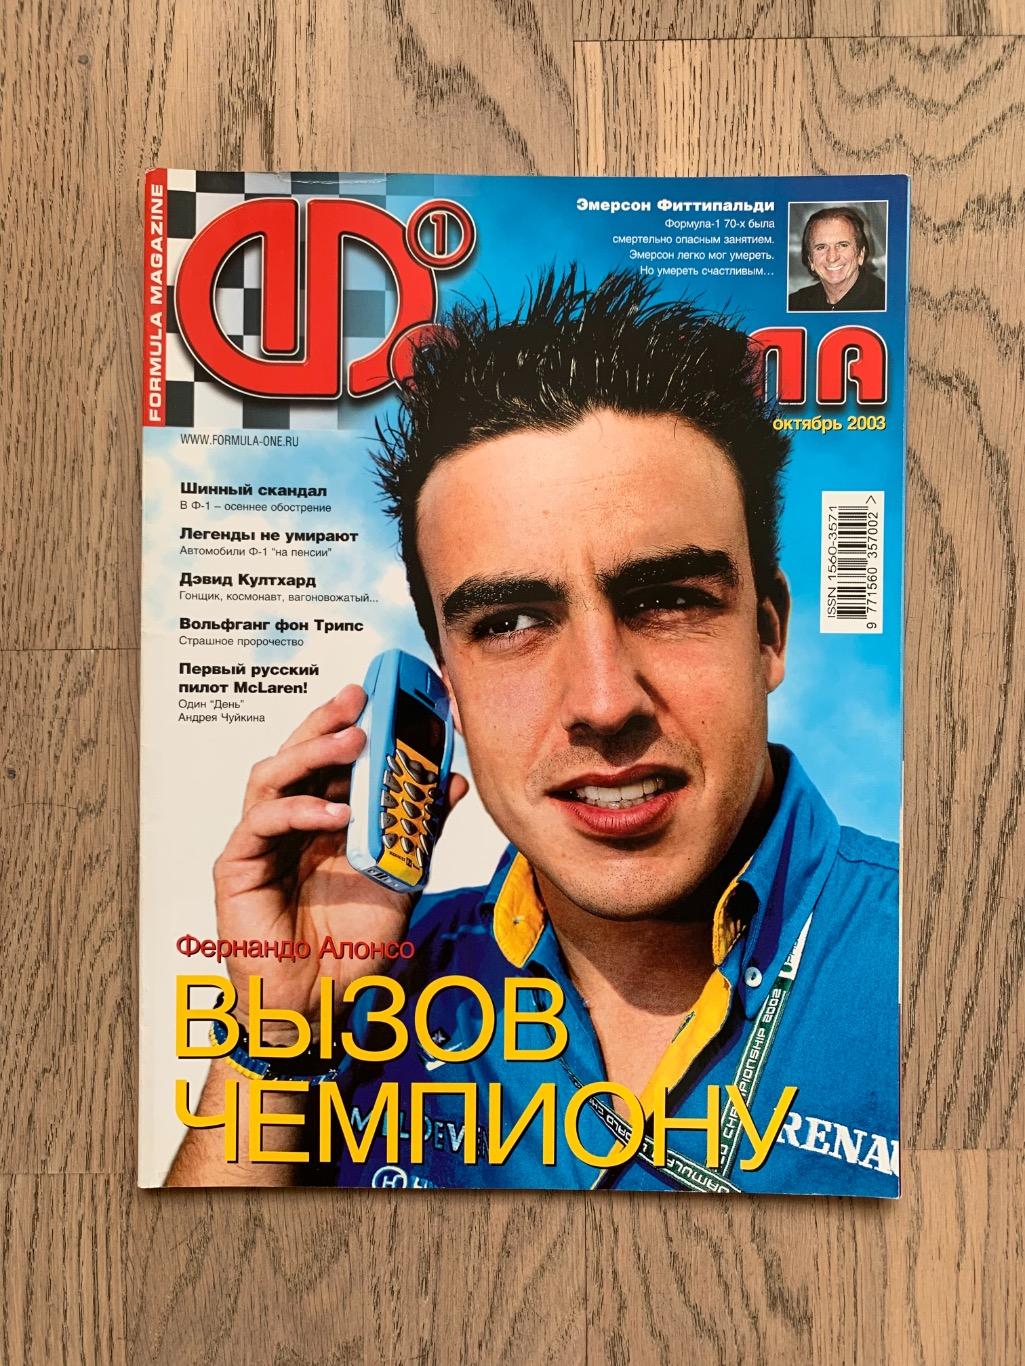 Журнал Формула 1 (Formula Magazine) / октябрь 2003